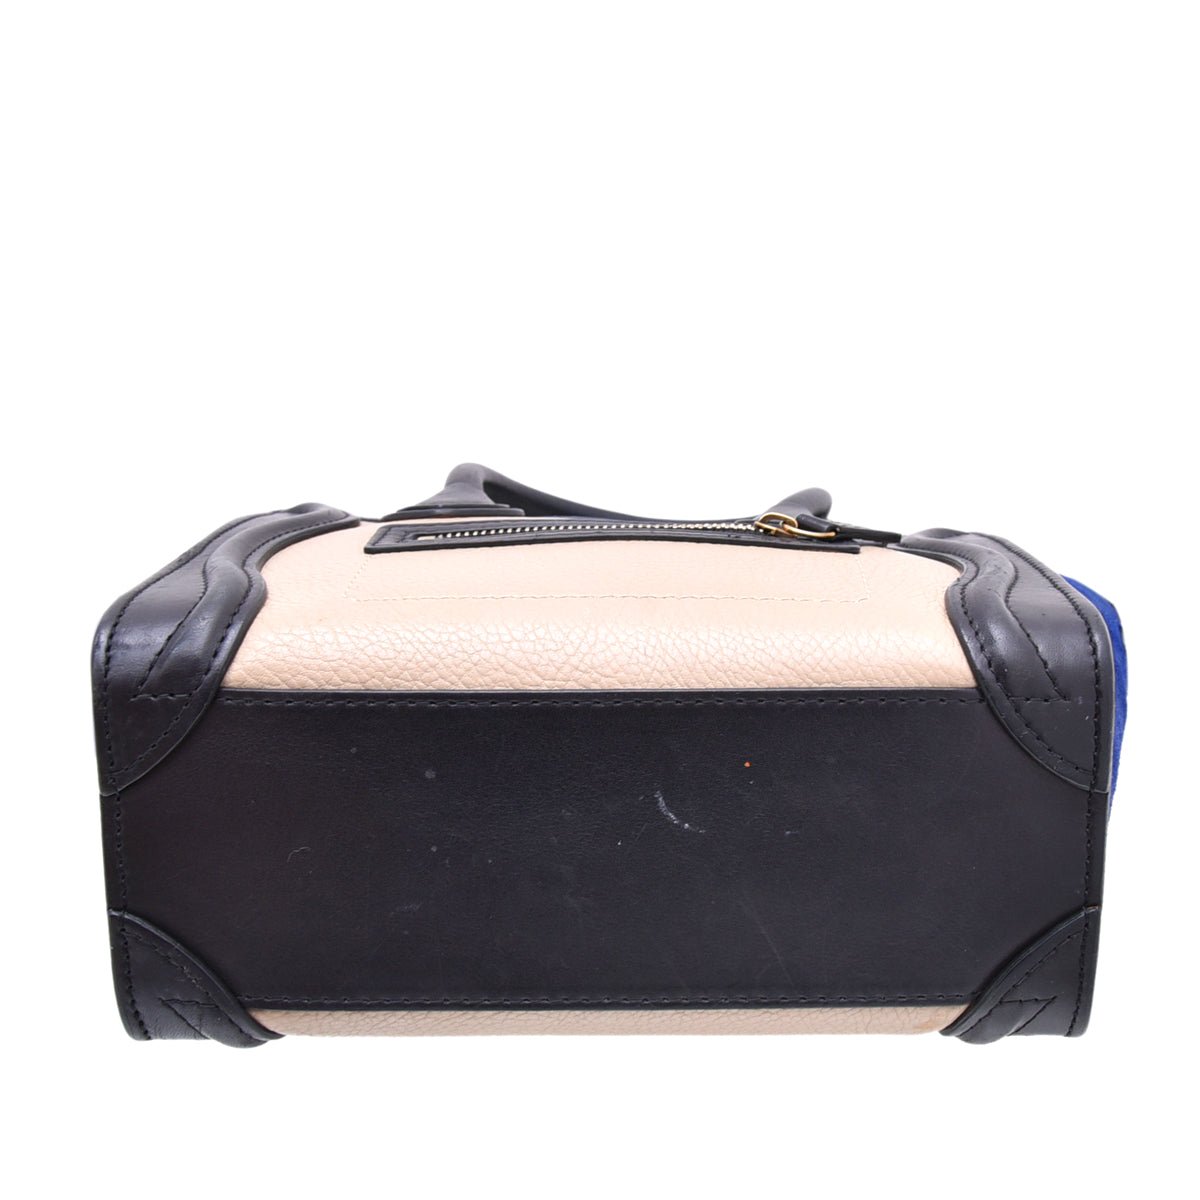 Celine - Celine Tricolor Nano Luggage Bag | The Closet